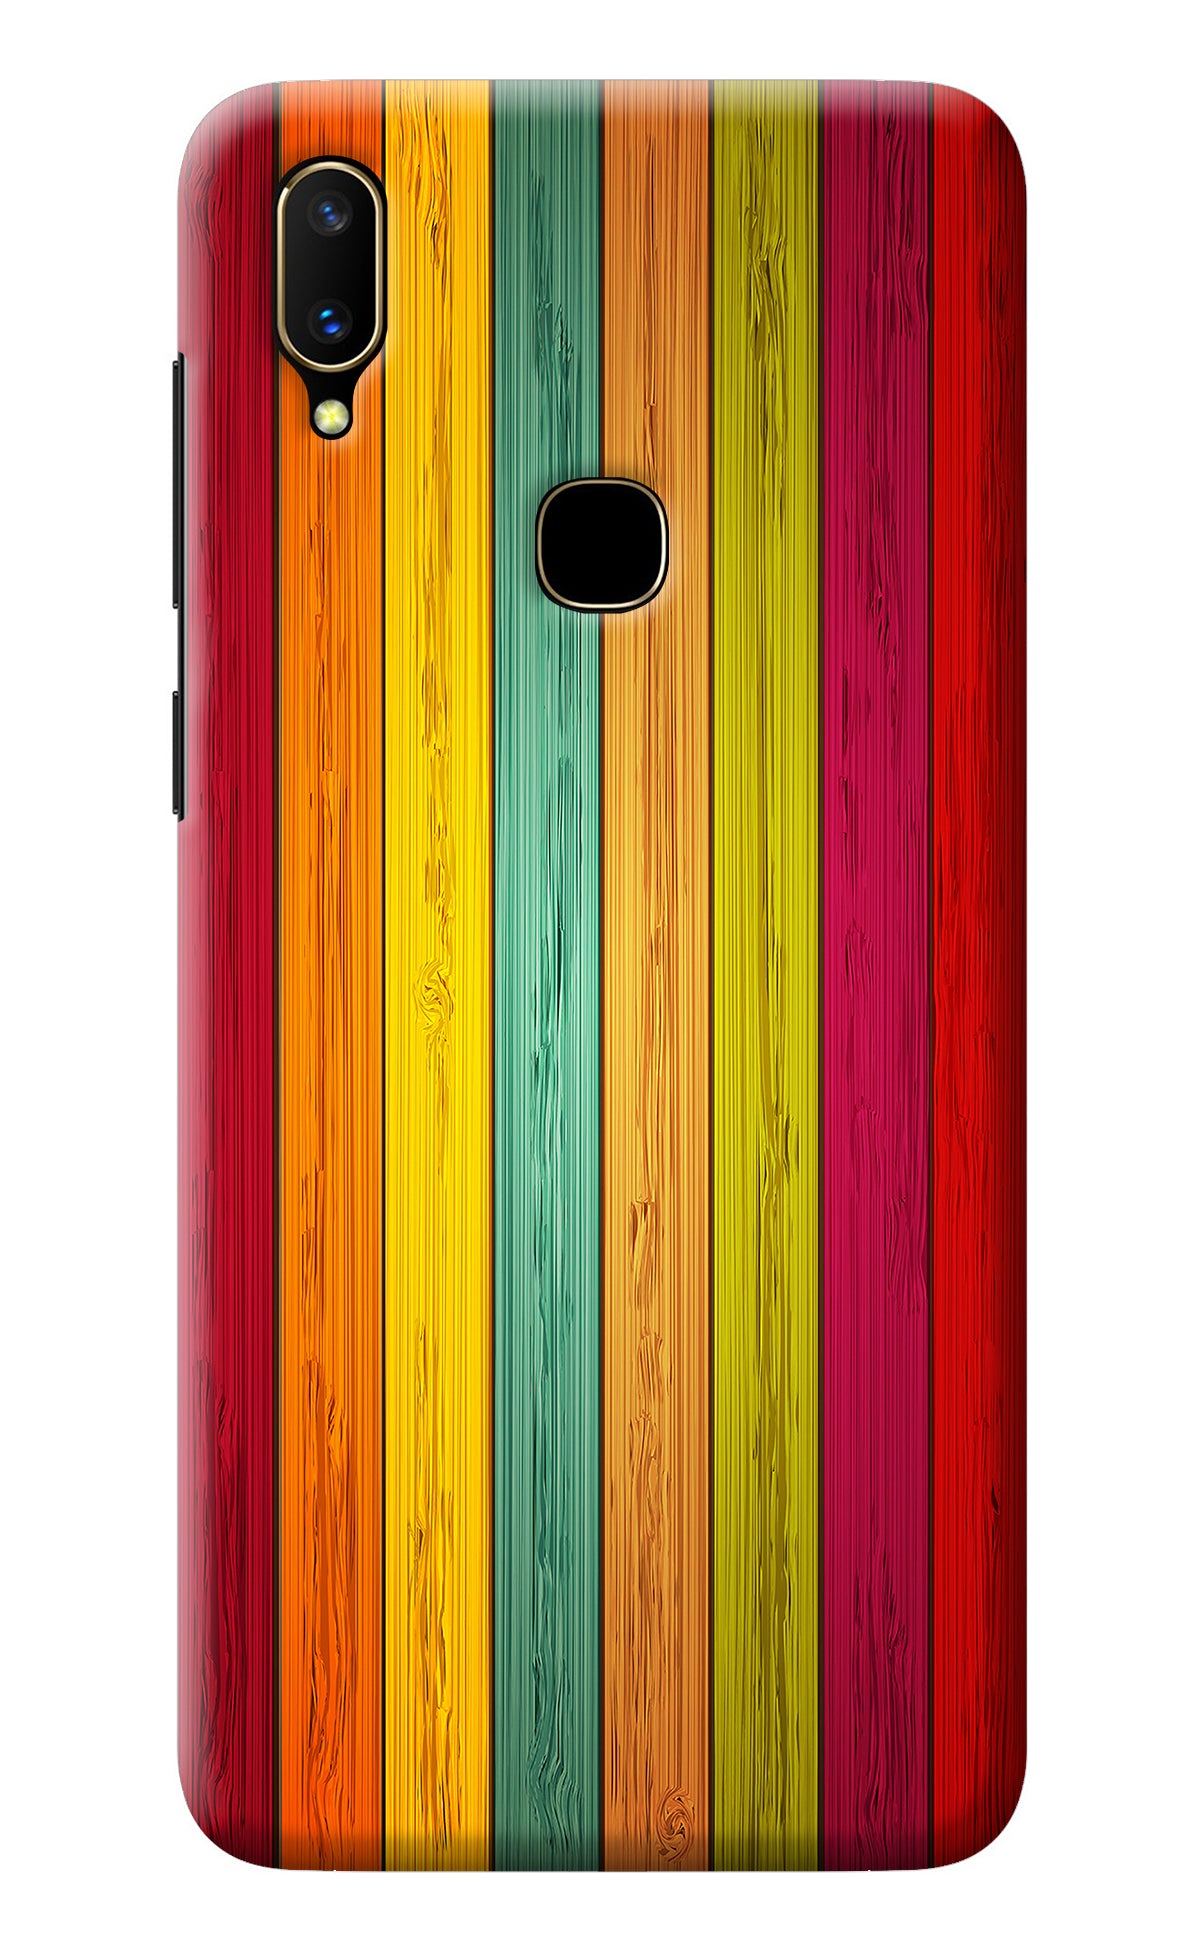 Multicolor Wooden Vivo V11 Back Cover